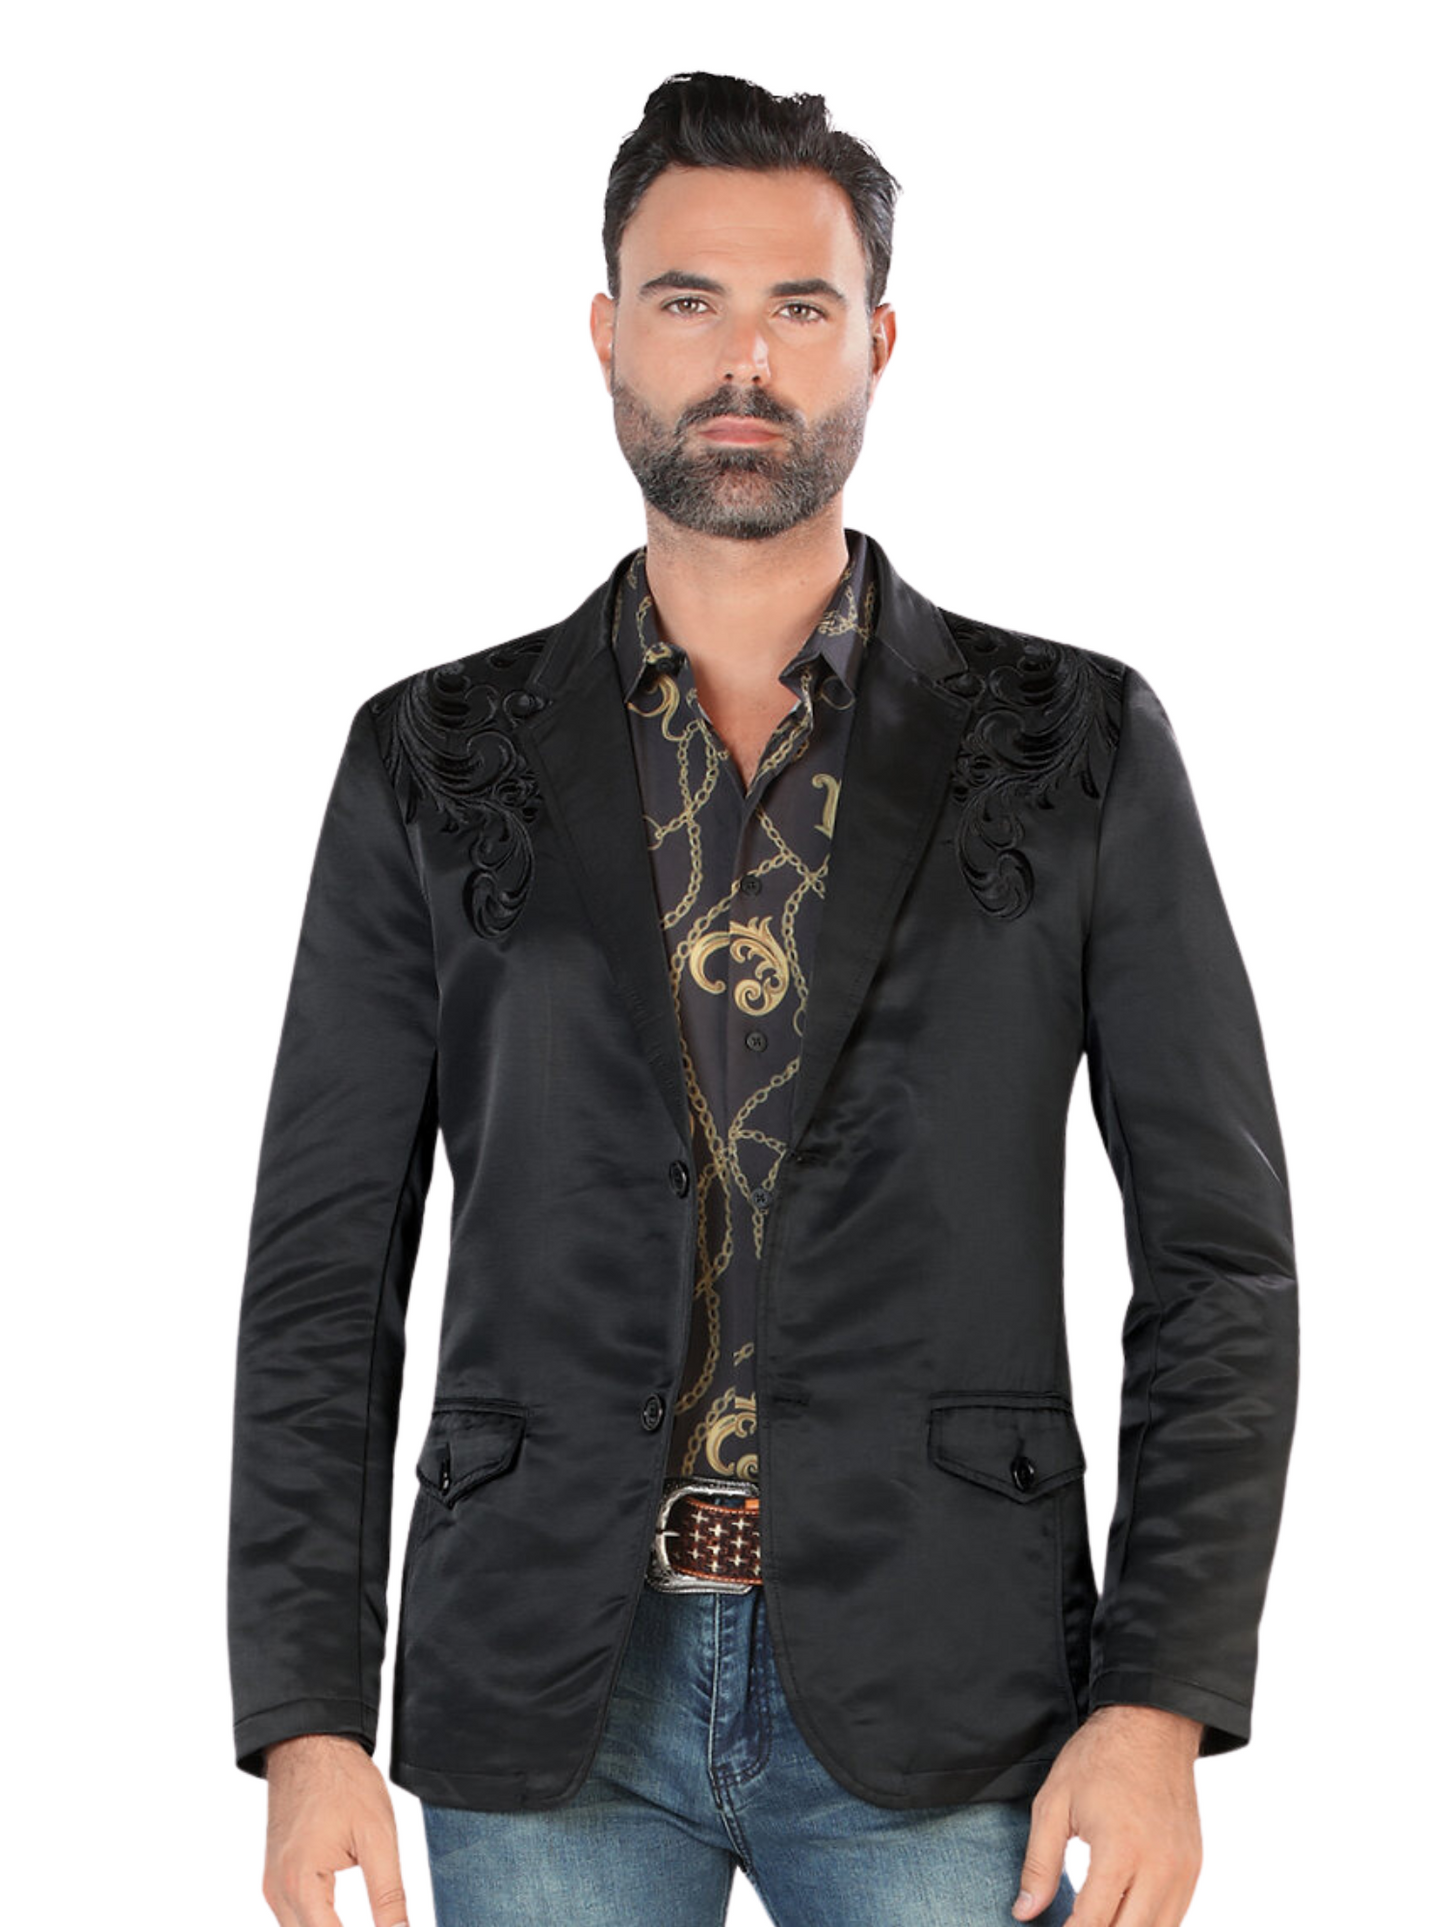 Saco Vaquero Bordado para Hombre 'Montero' - ID: 2173 Western Blazer Montero Black/Black